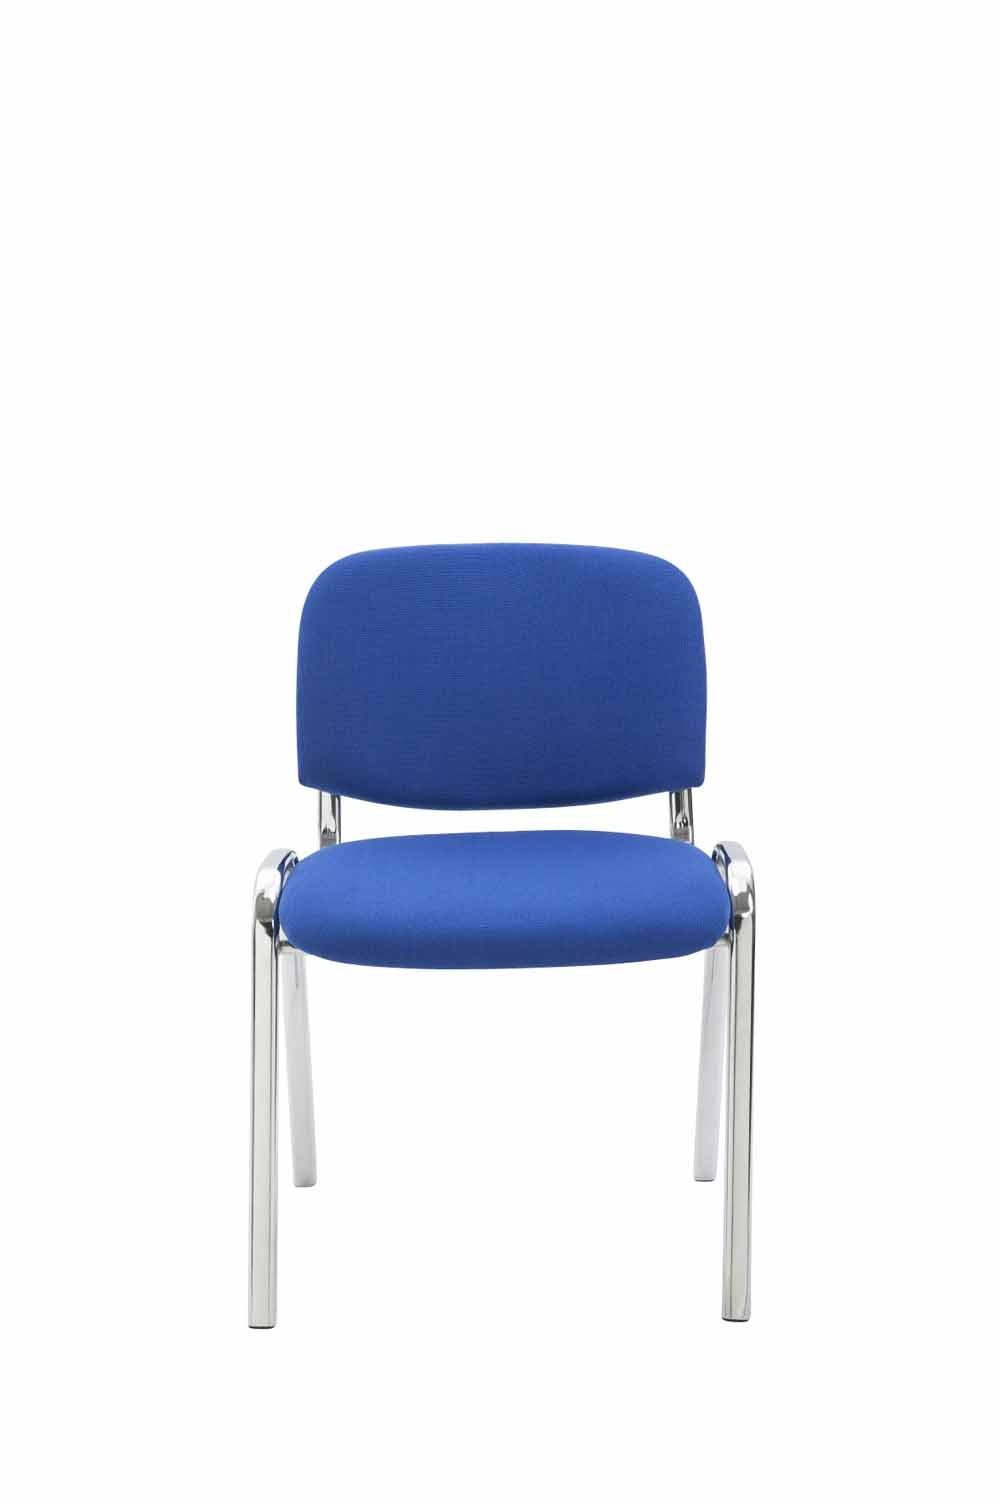 - Messestuhl), Polsterung Besucherstuhl Metall chrom mit - Keen (Besprechungsstuhl Sitzfläche: - Warteraumstuhl hochwertiger blau TPFLiving Konferenzstuhl Gestell: Stoff -